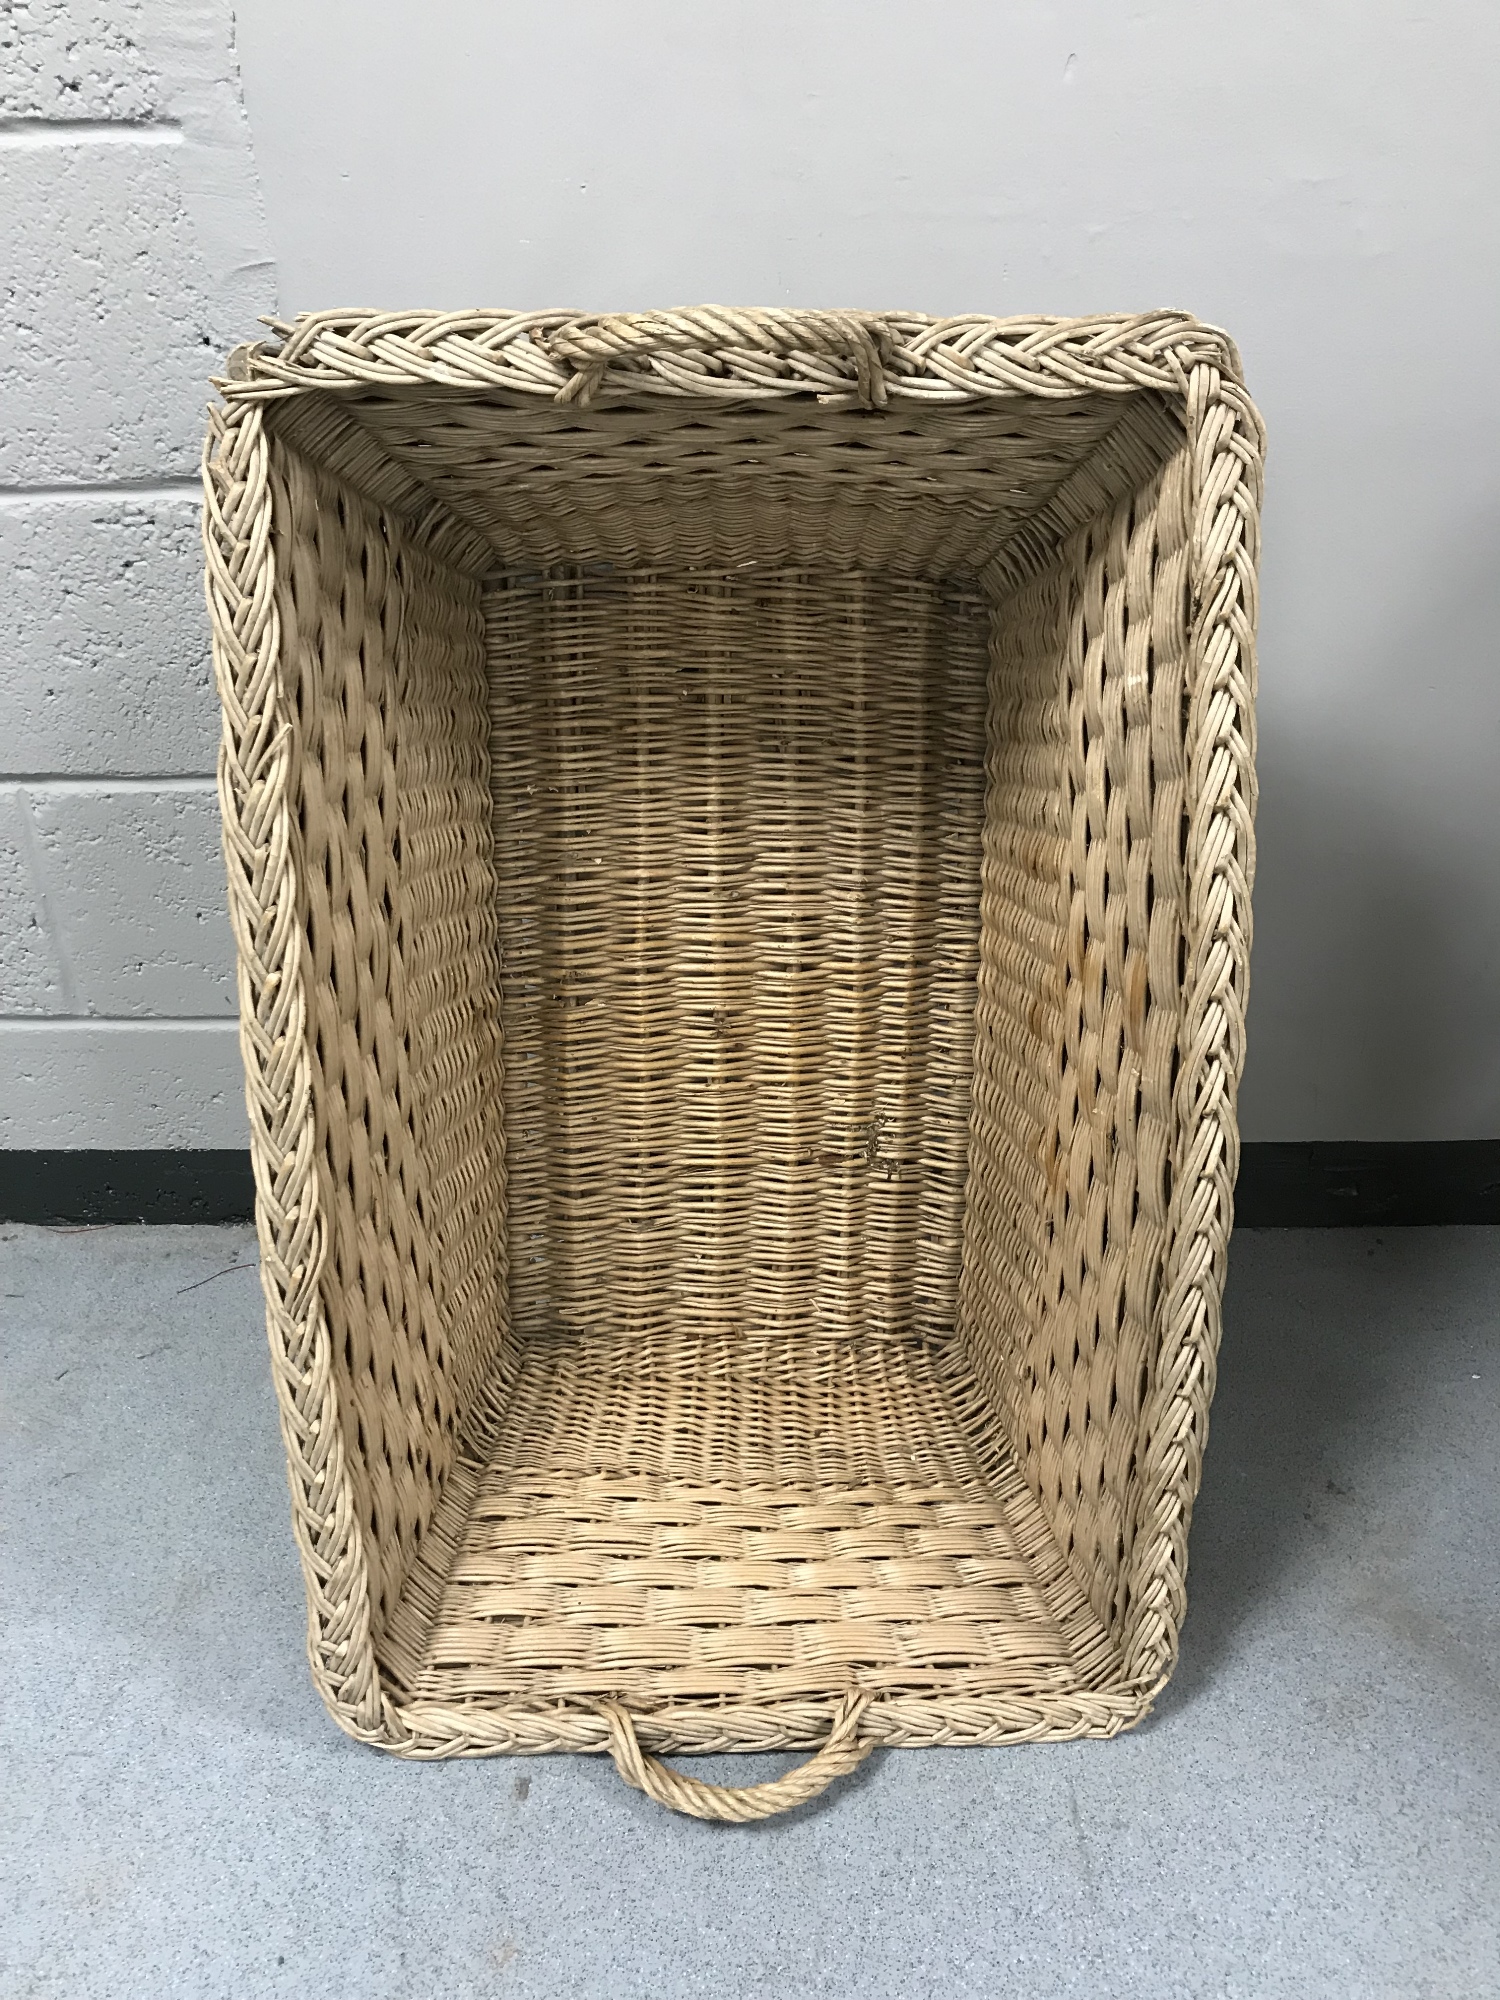 A large wicker log basket